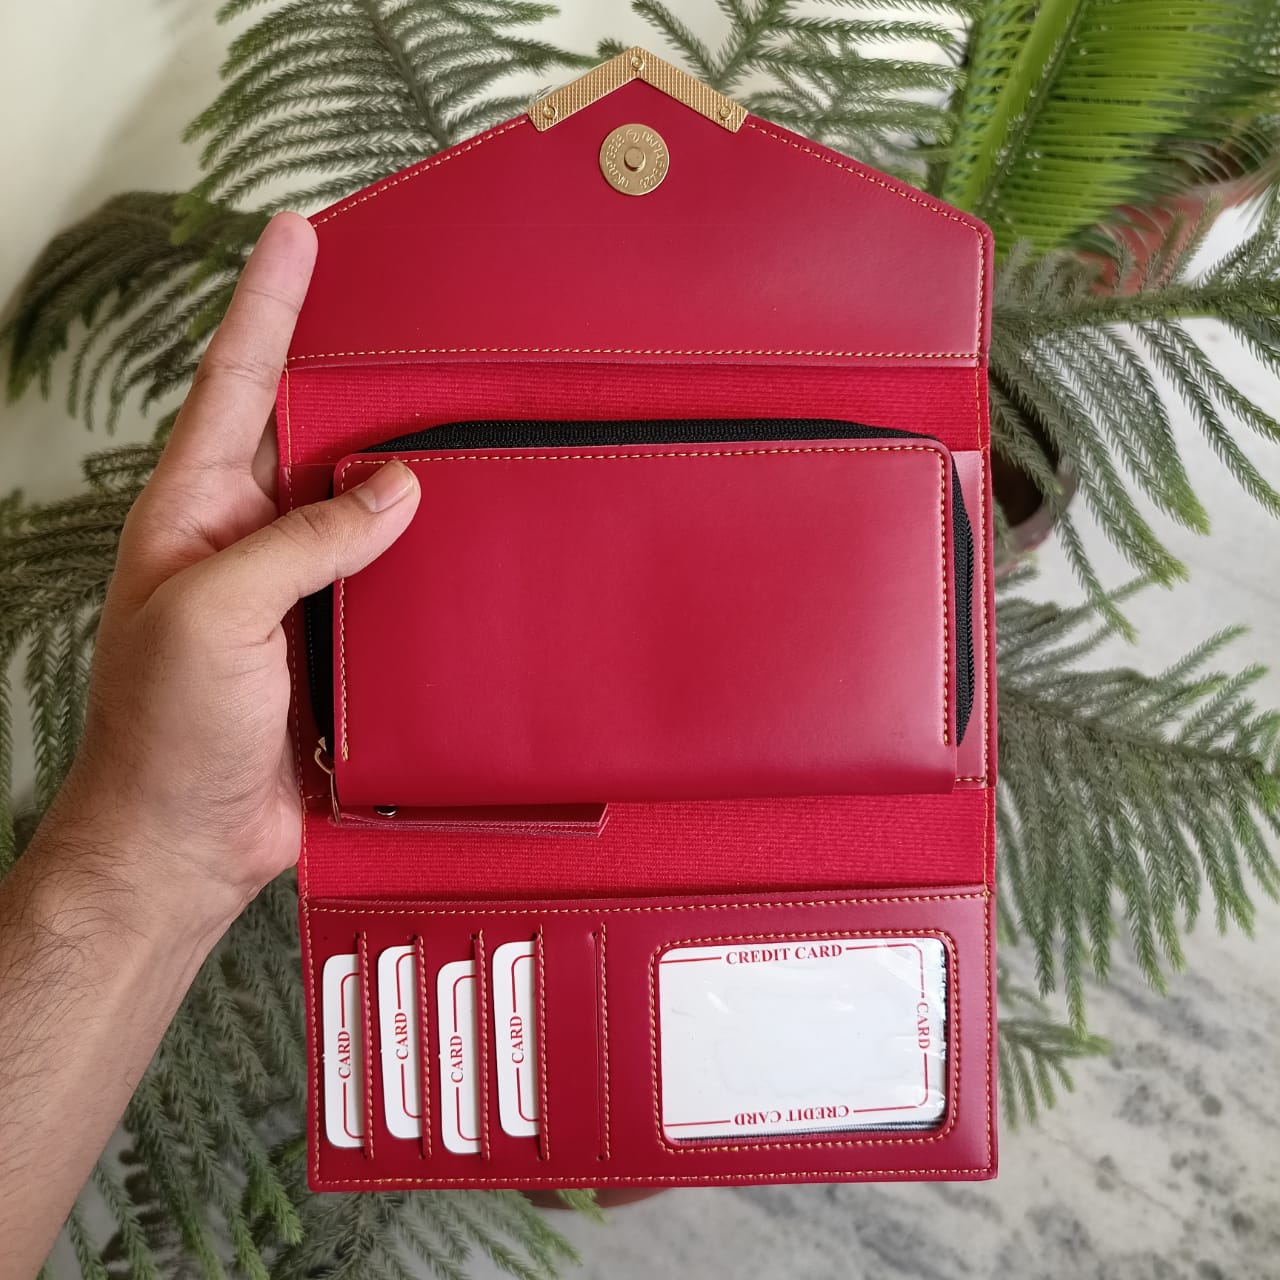 Personalized Women's Leather Wallet/Clutch